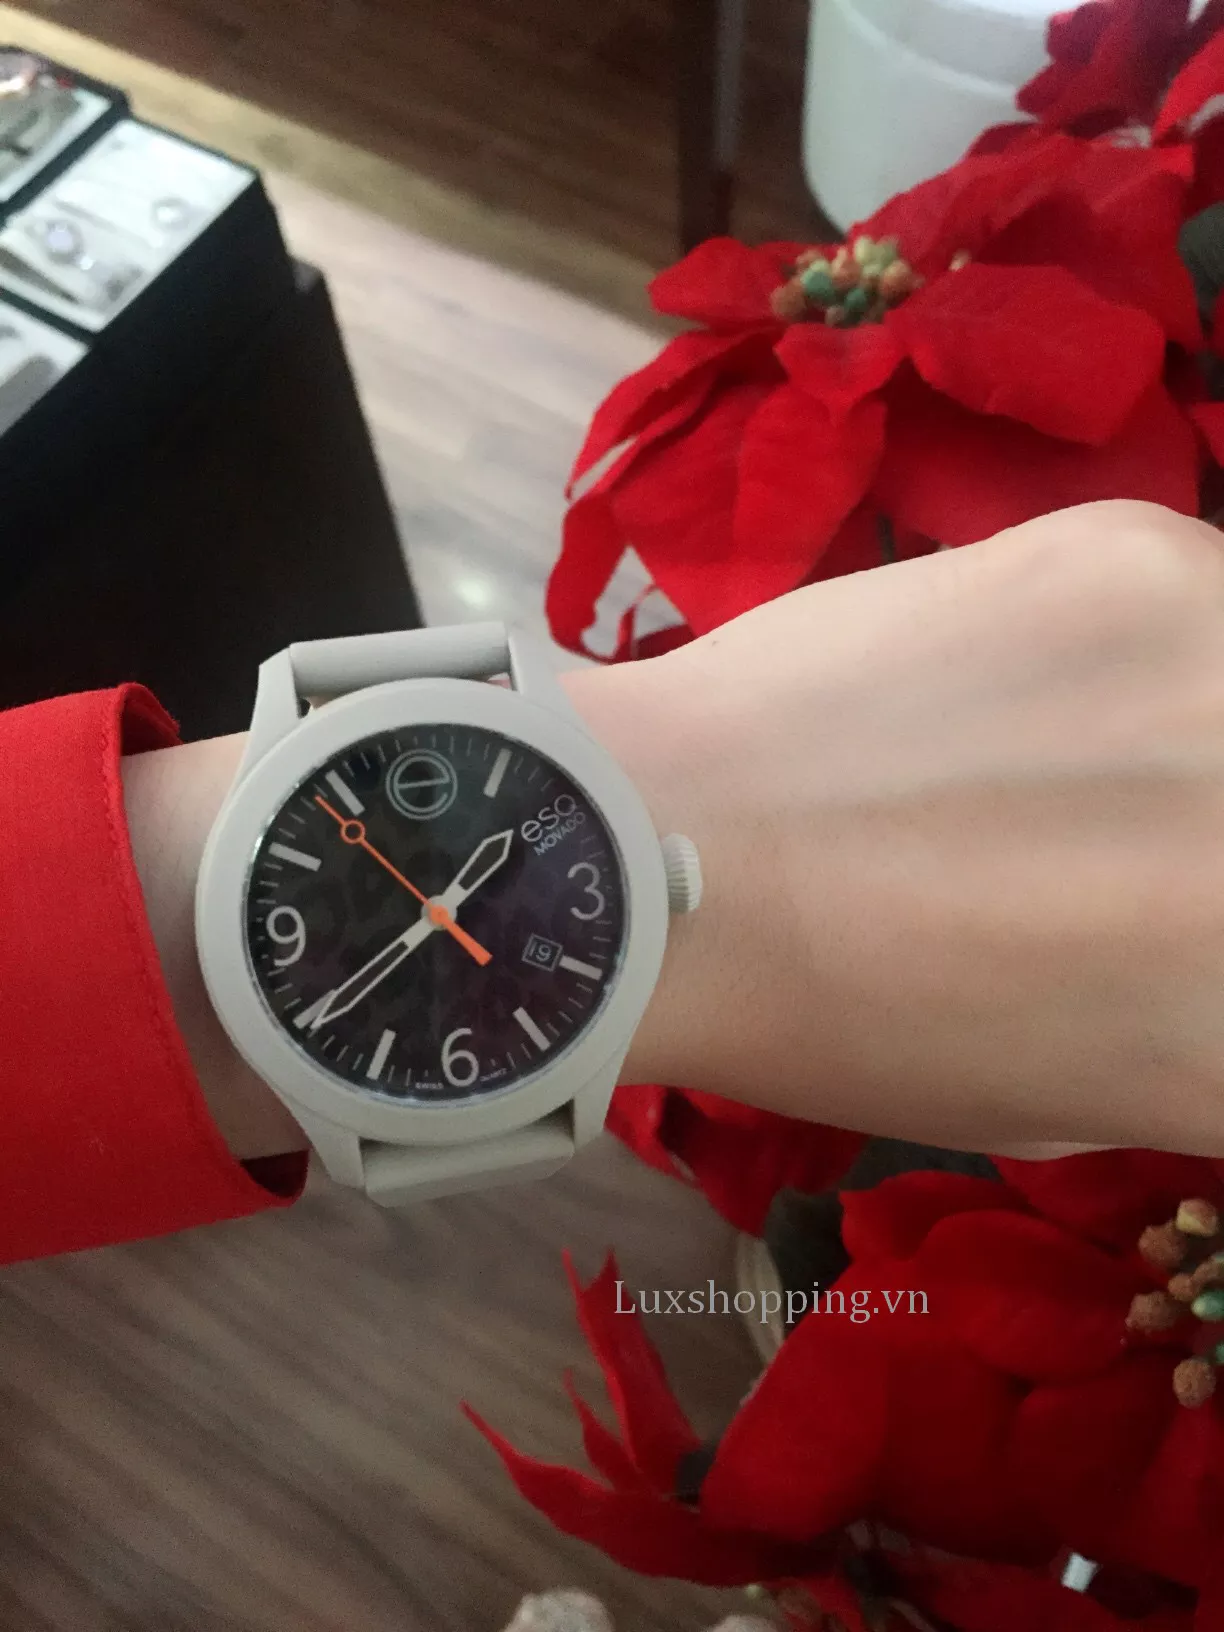 ESQ by Movado One Quartz Watch 42mm